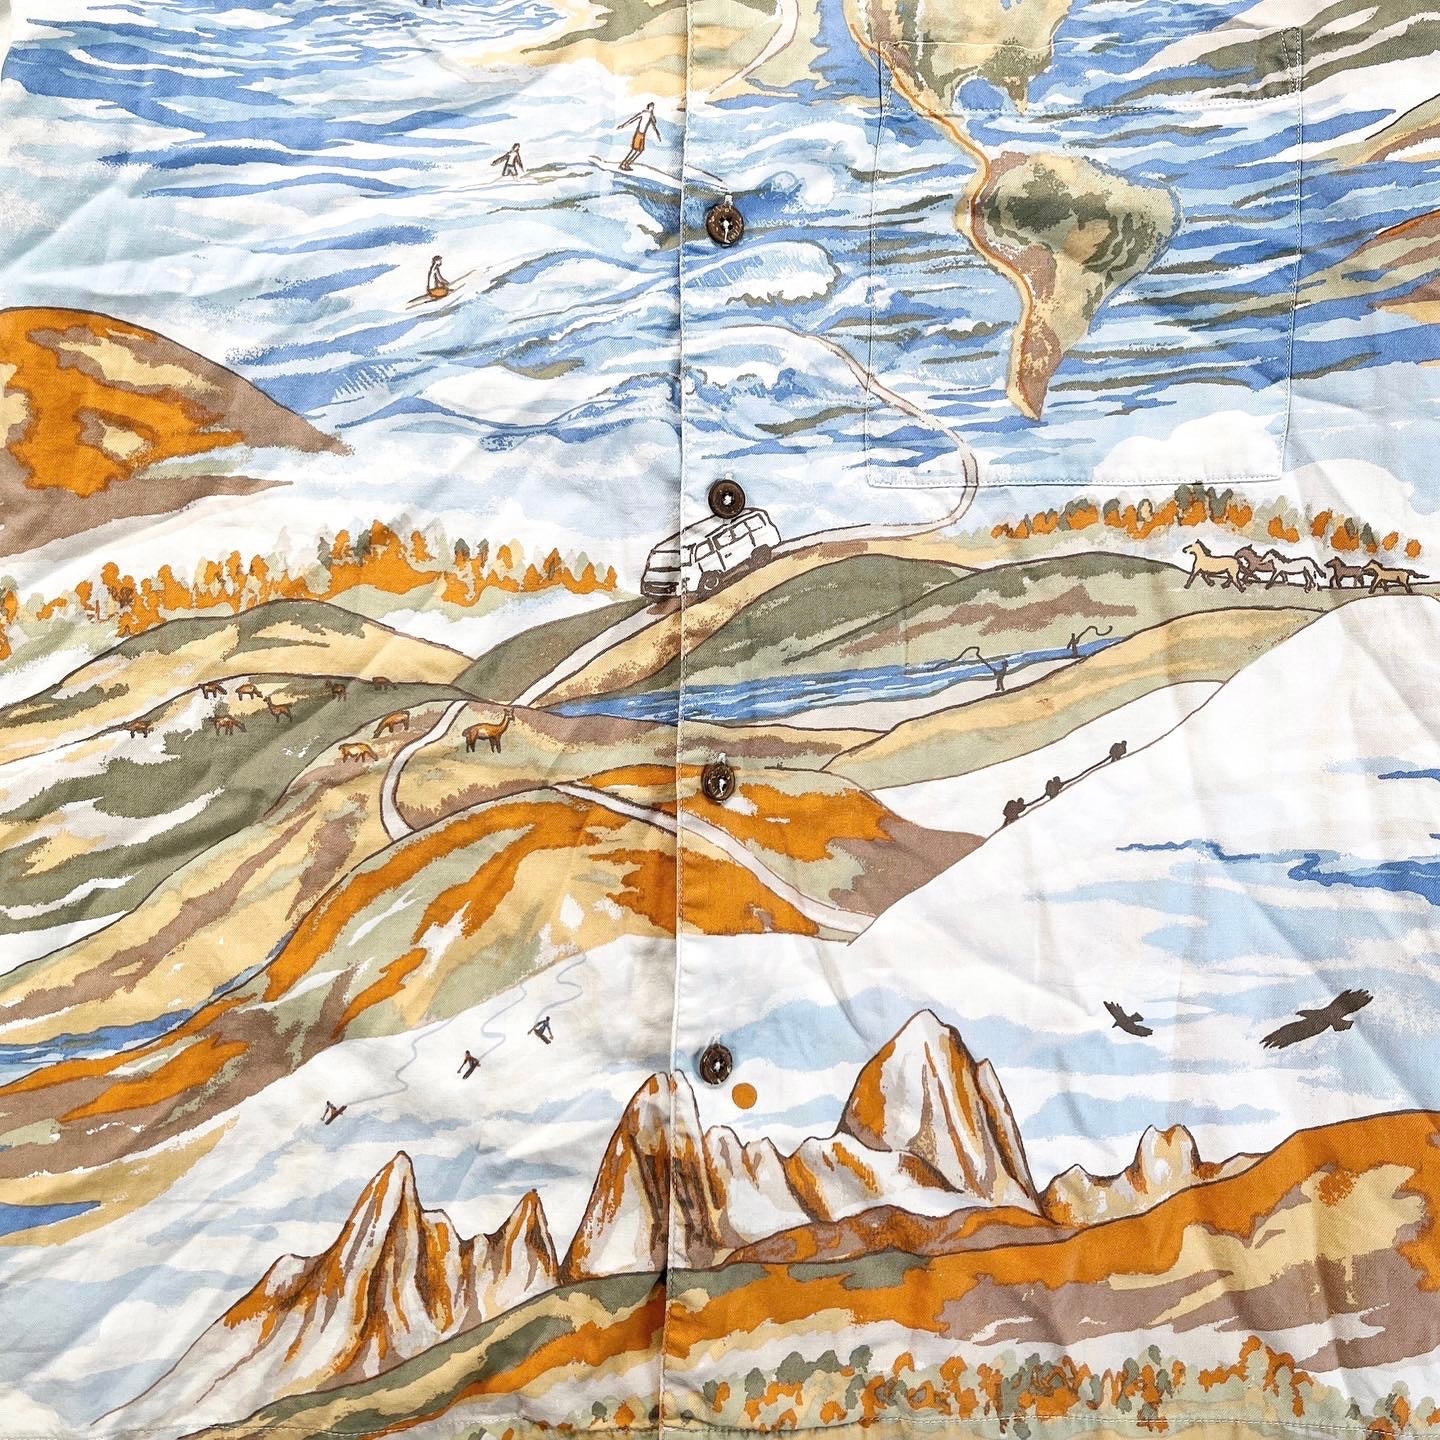 2009 Patagonia Mens Pataloha Print Shirt, Mountain of Storms (XL)